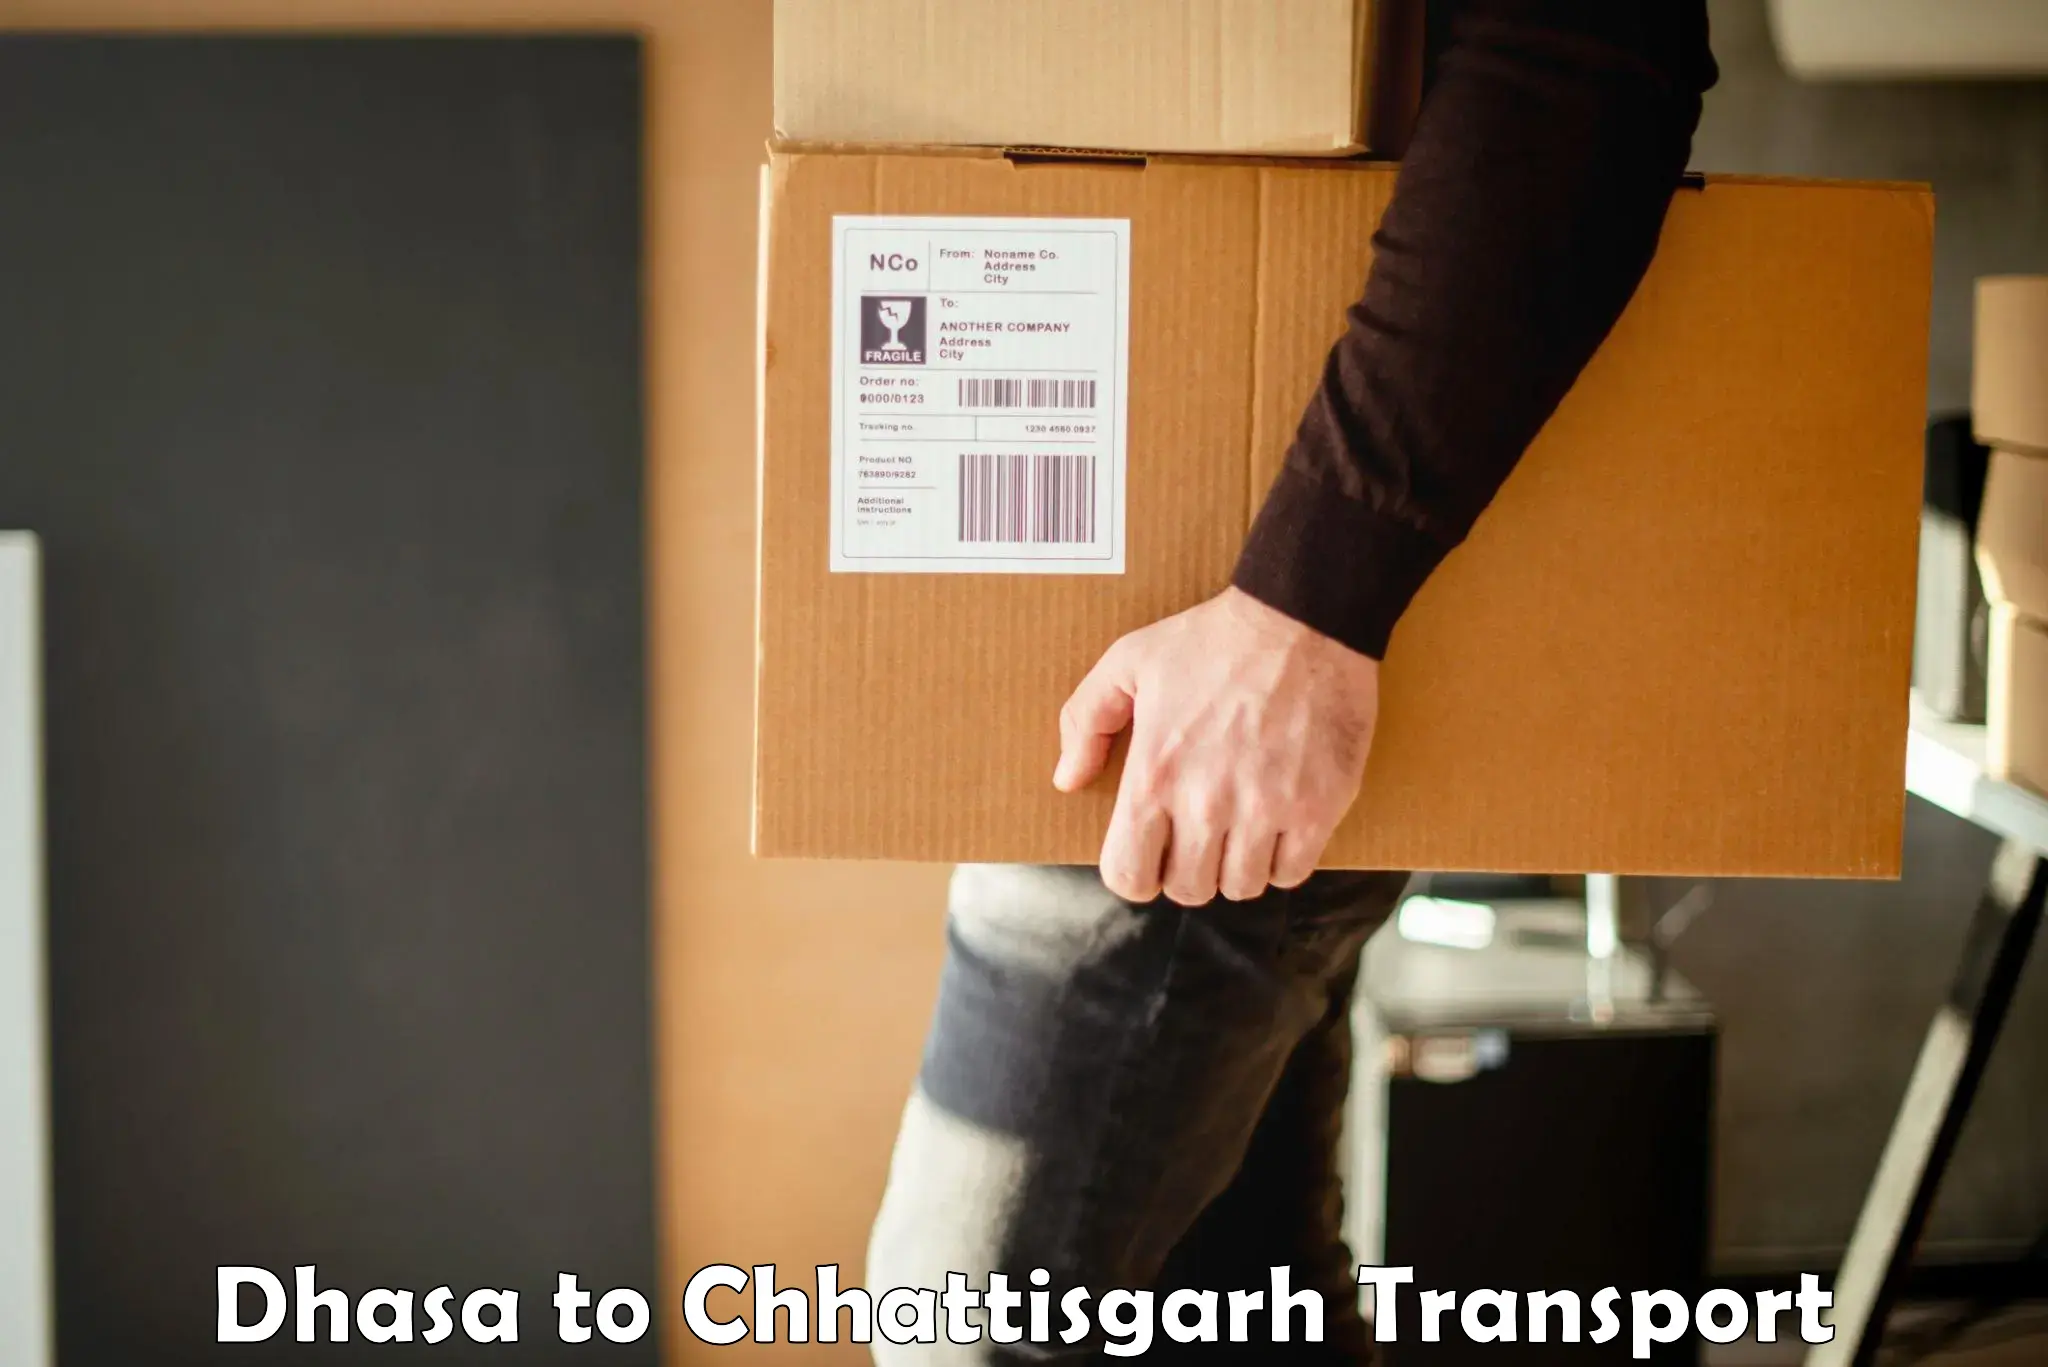 Truck transport companies in India Dhasa to Patna Chhattisgarh